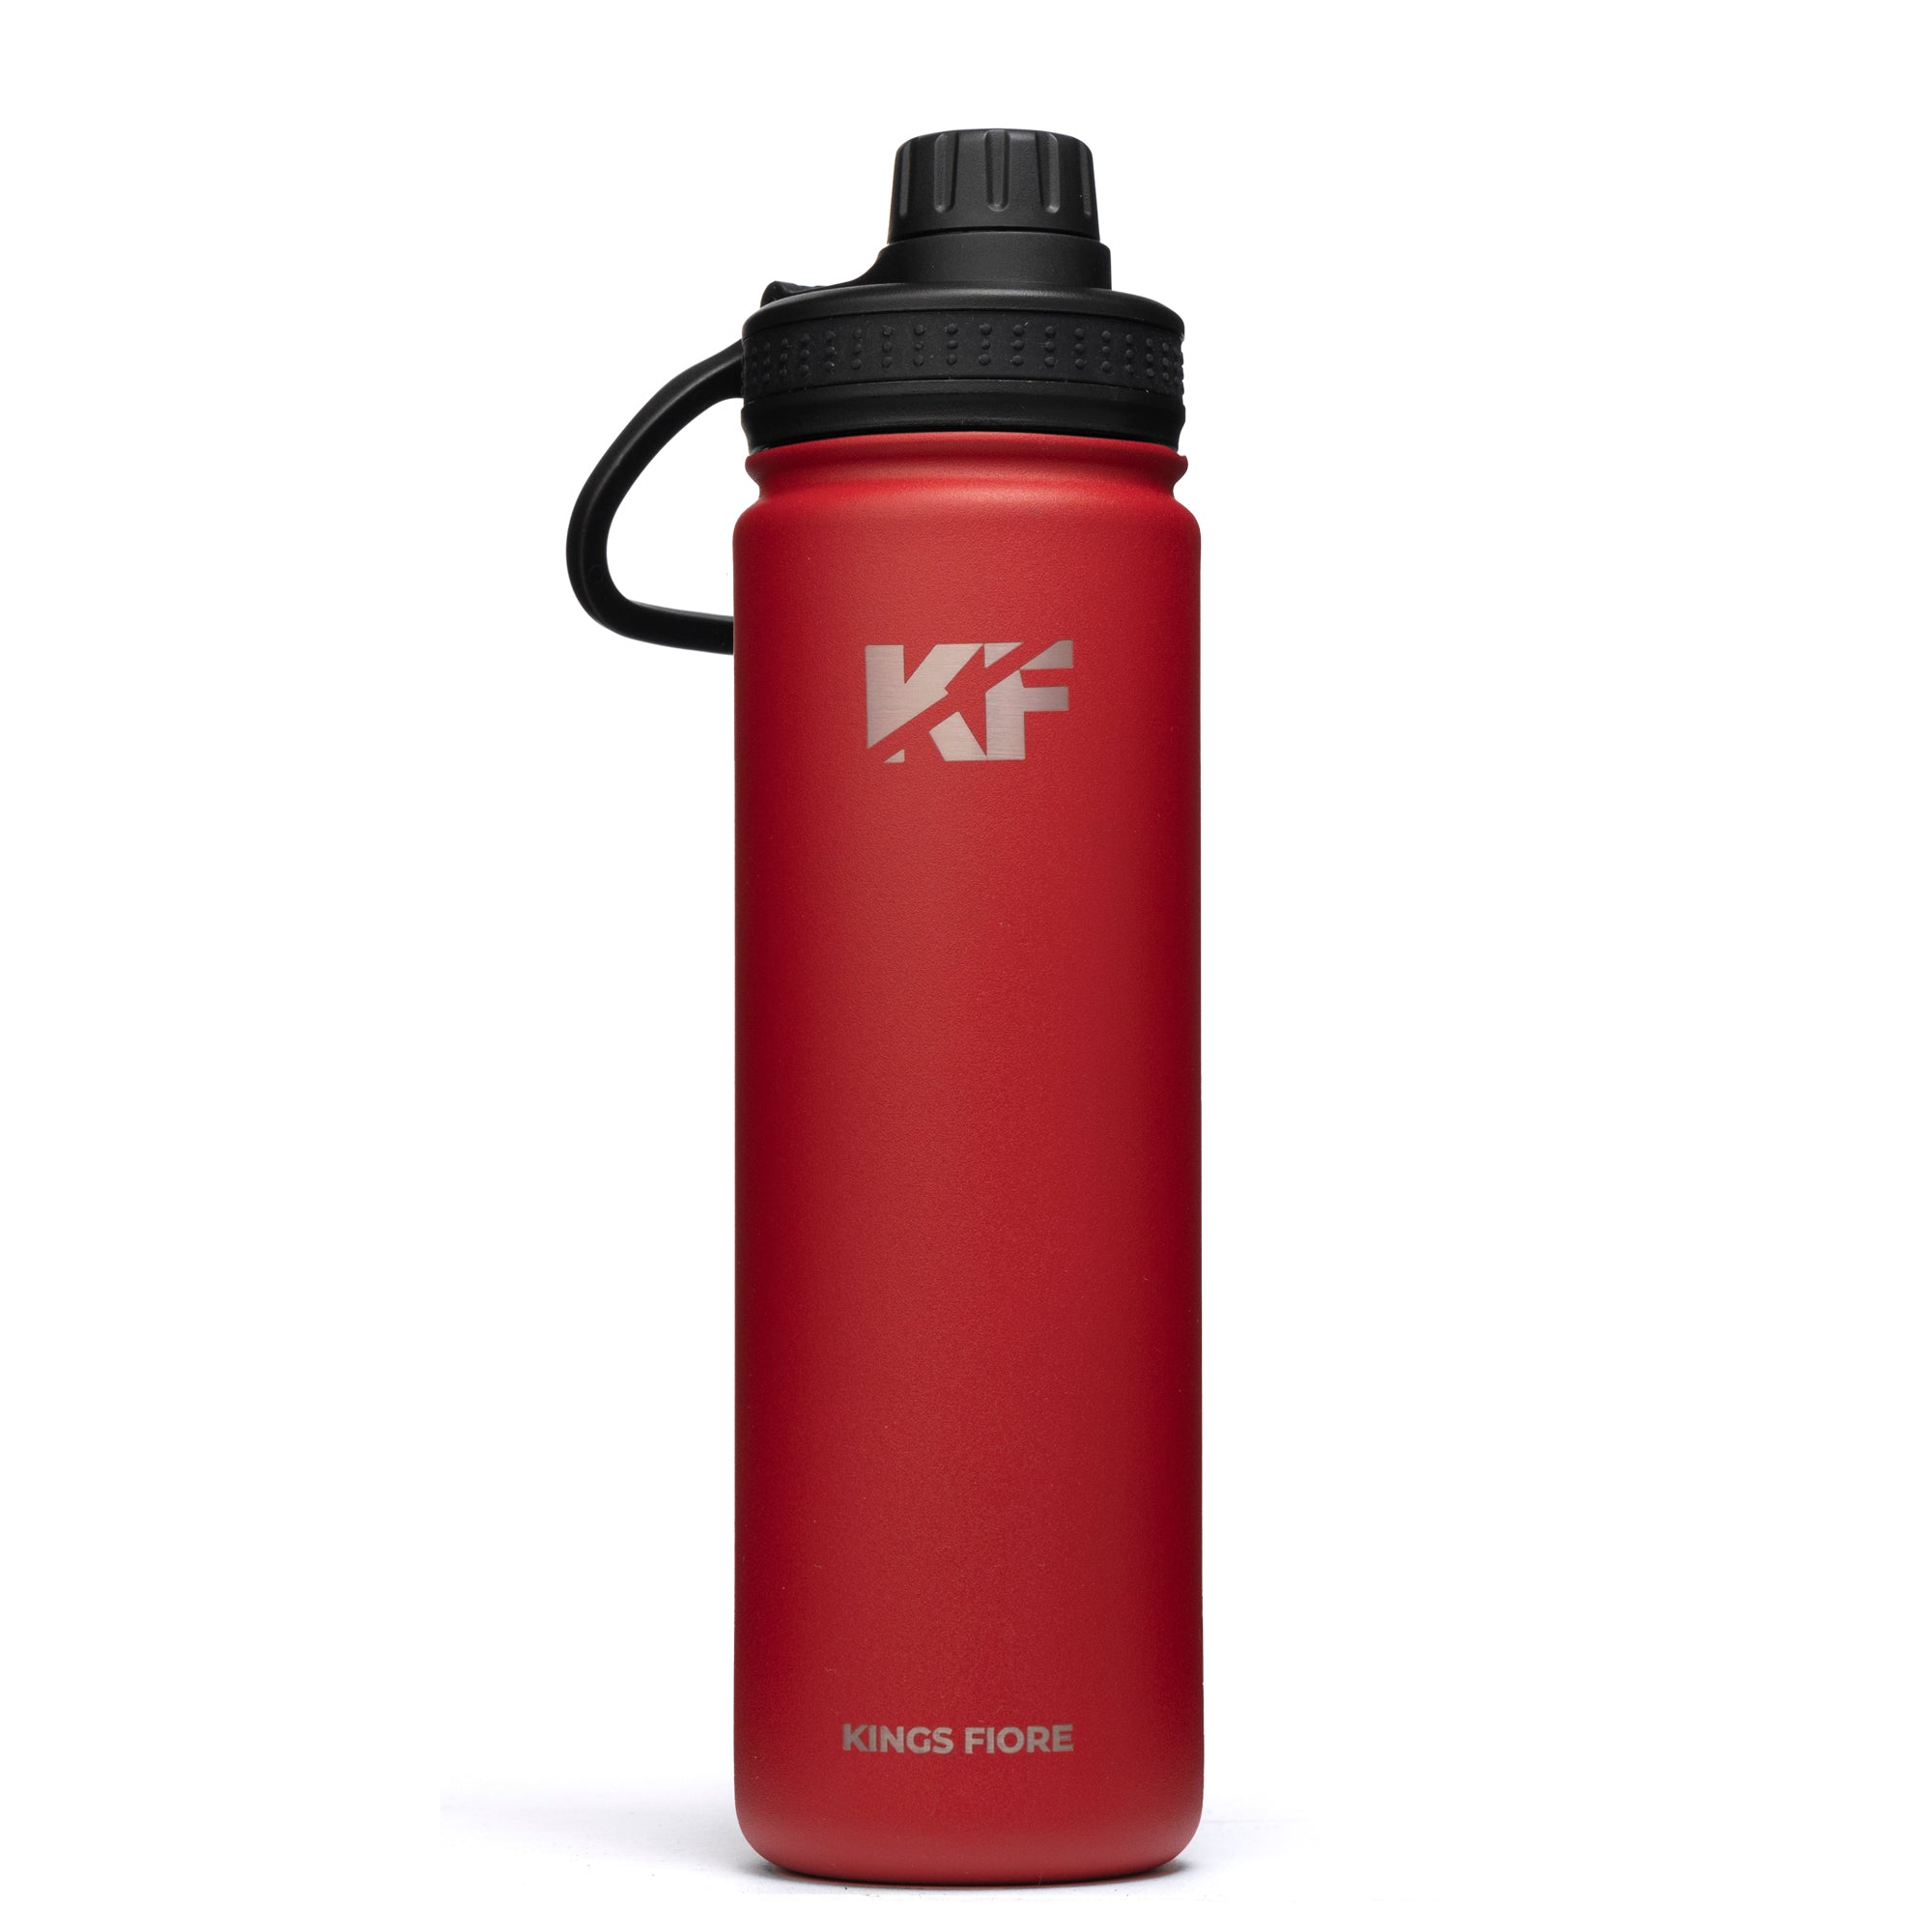 Kings Fiore Stainless Steel Water Bottle (22 oz, Fire Finch Red)